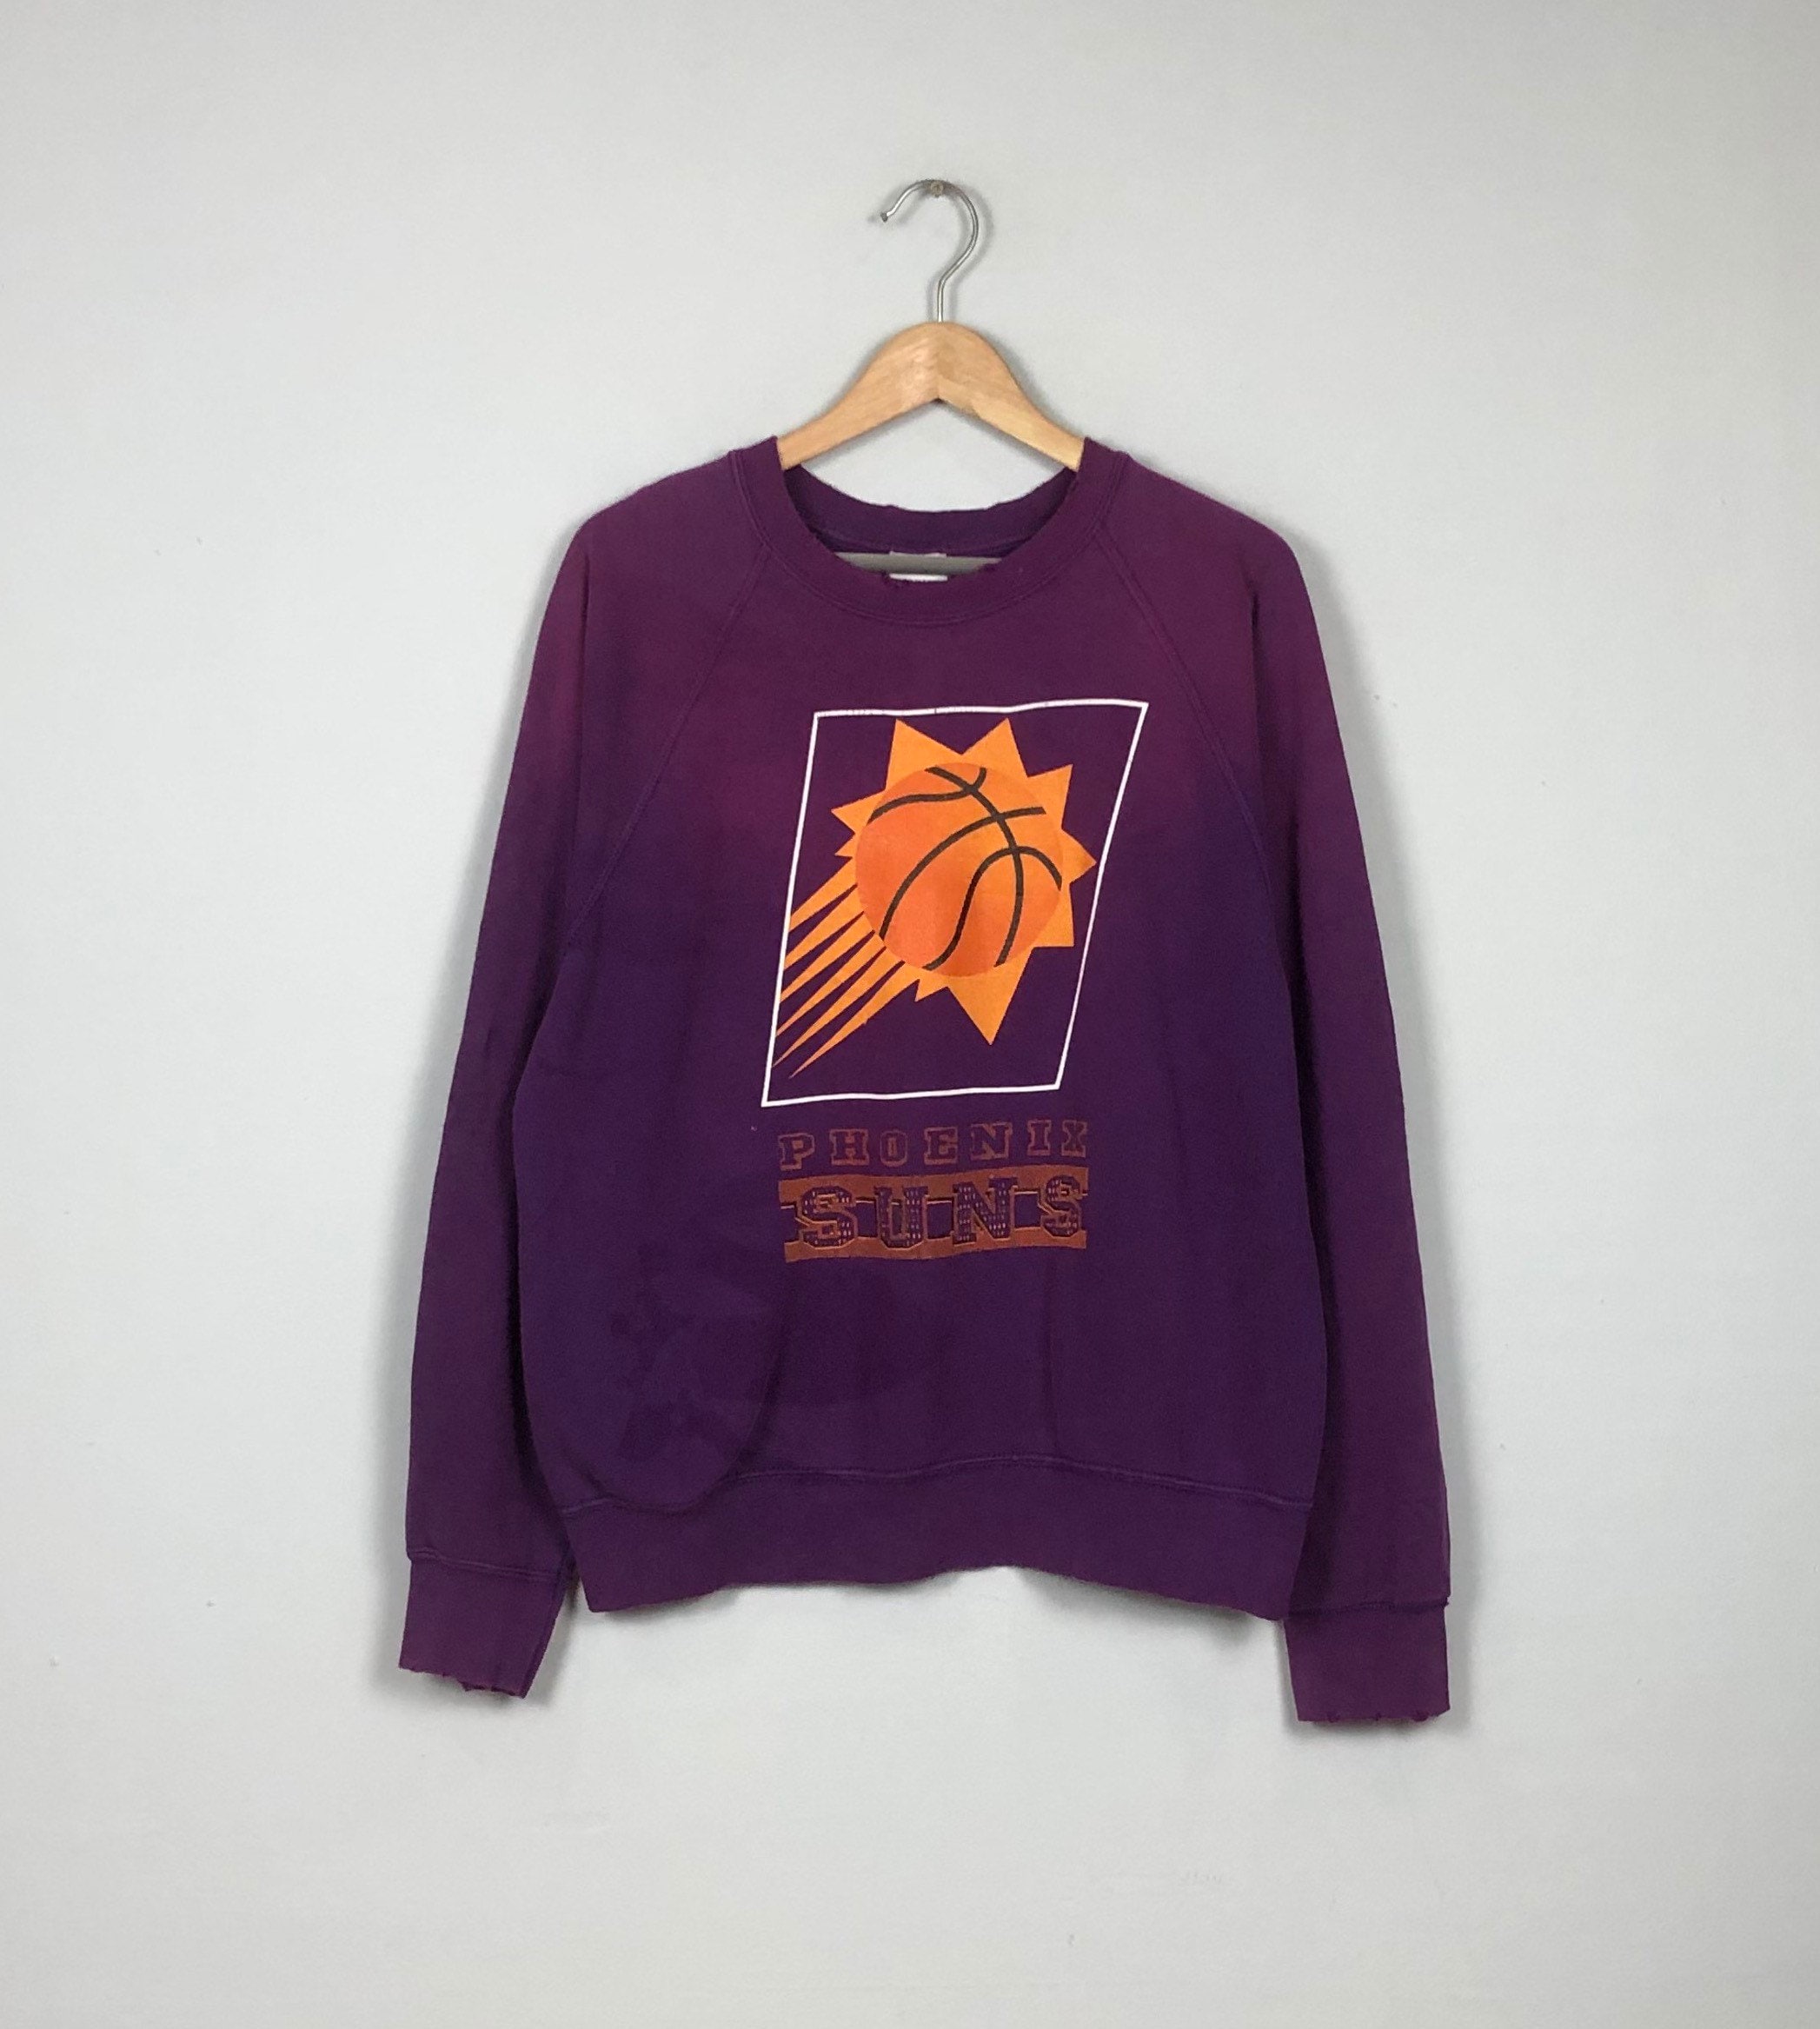 Charles Barkley 90s Inspired Shirt, hoodie, sweater, long sleeve